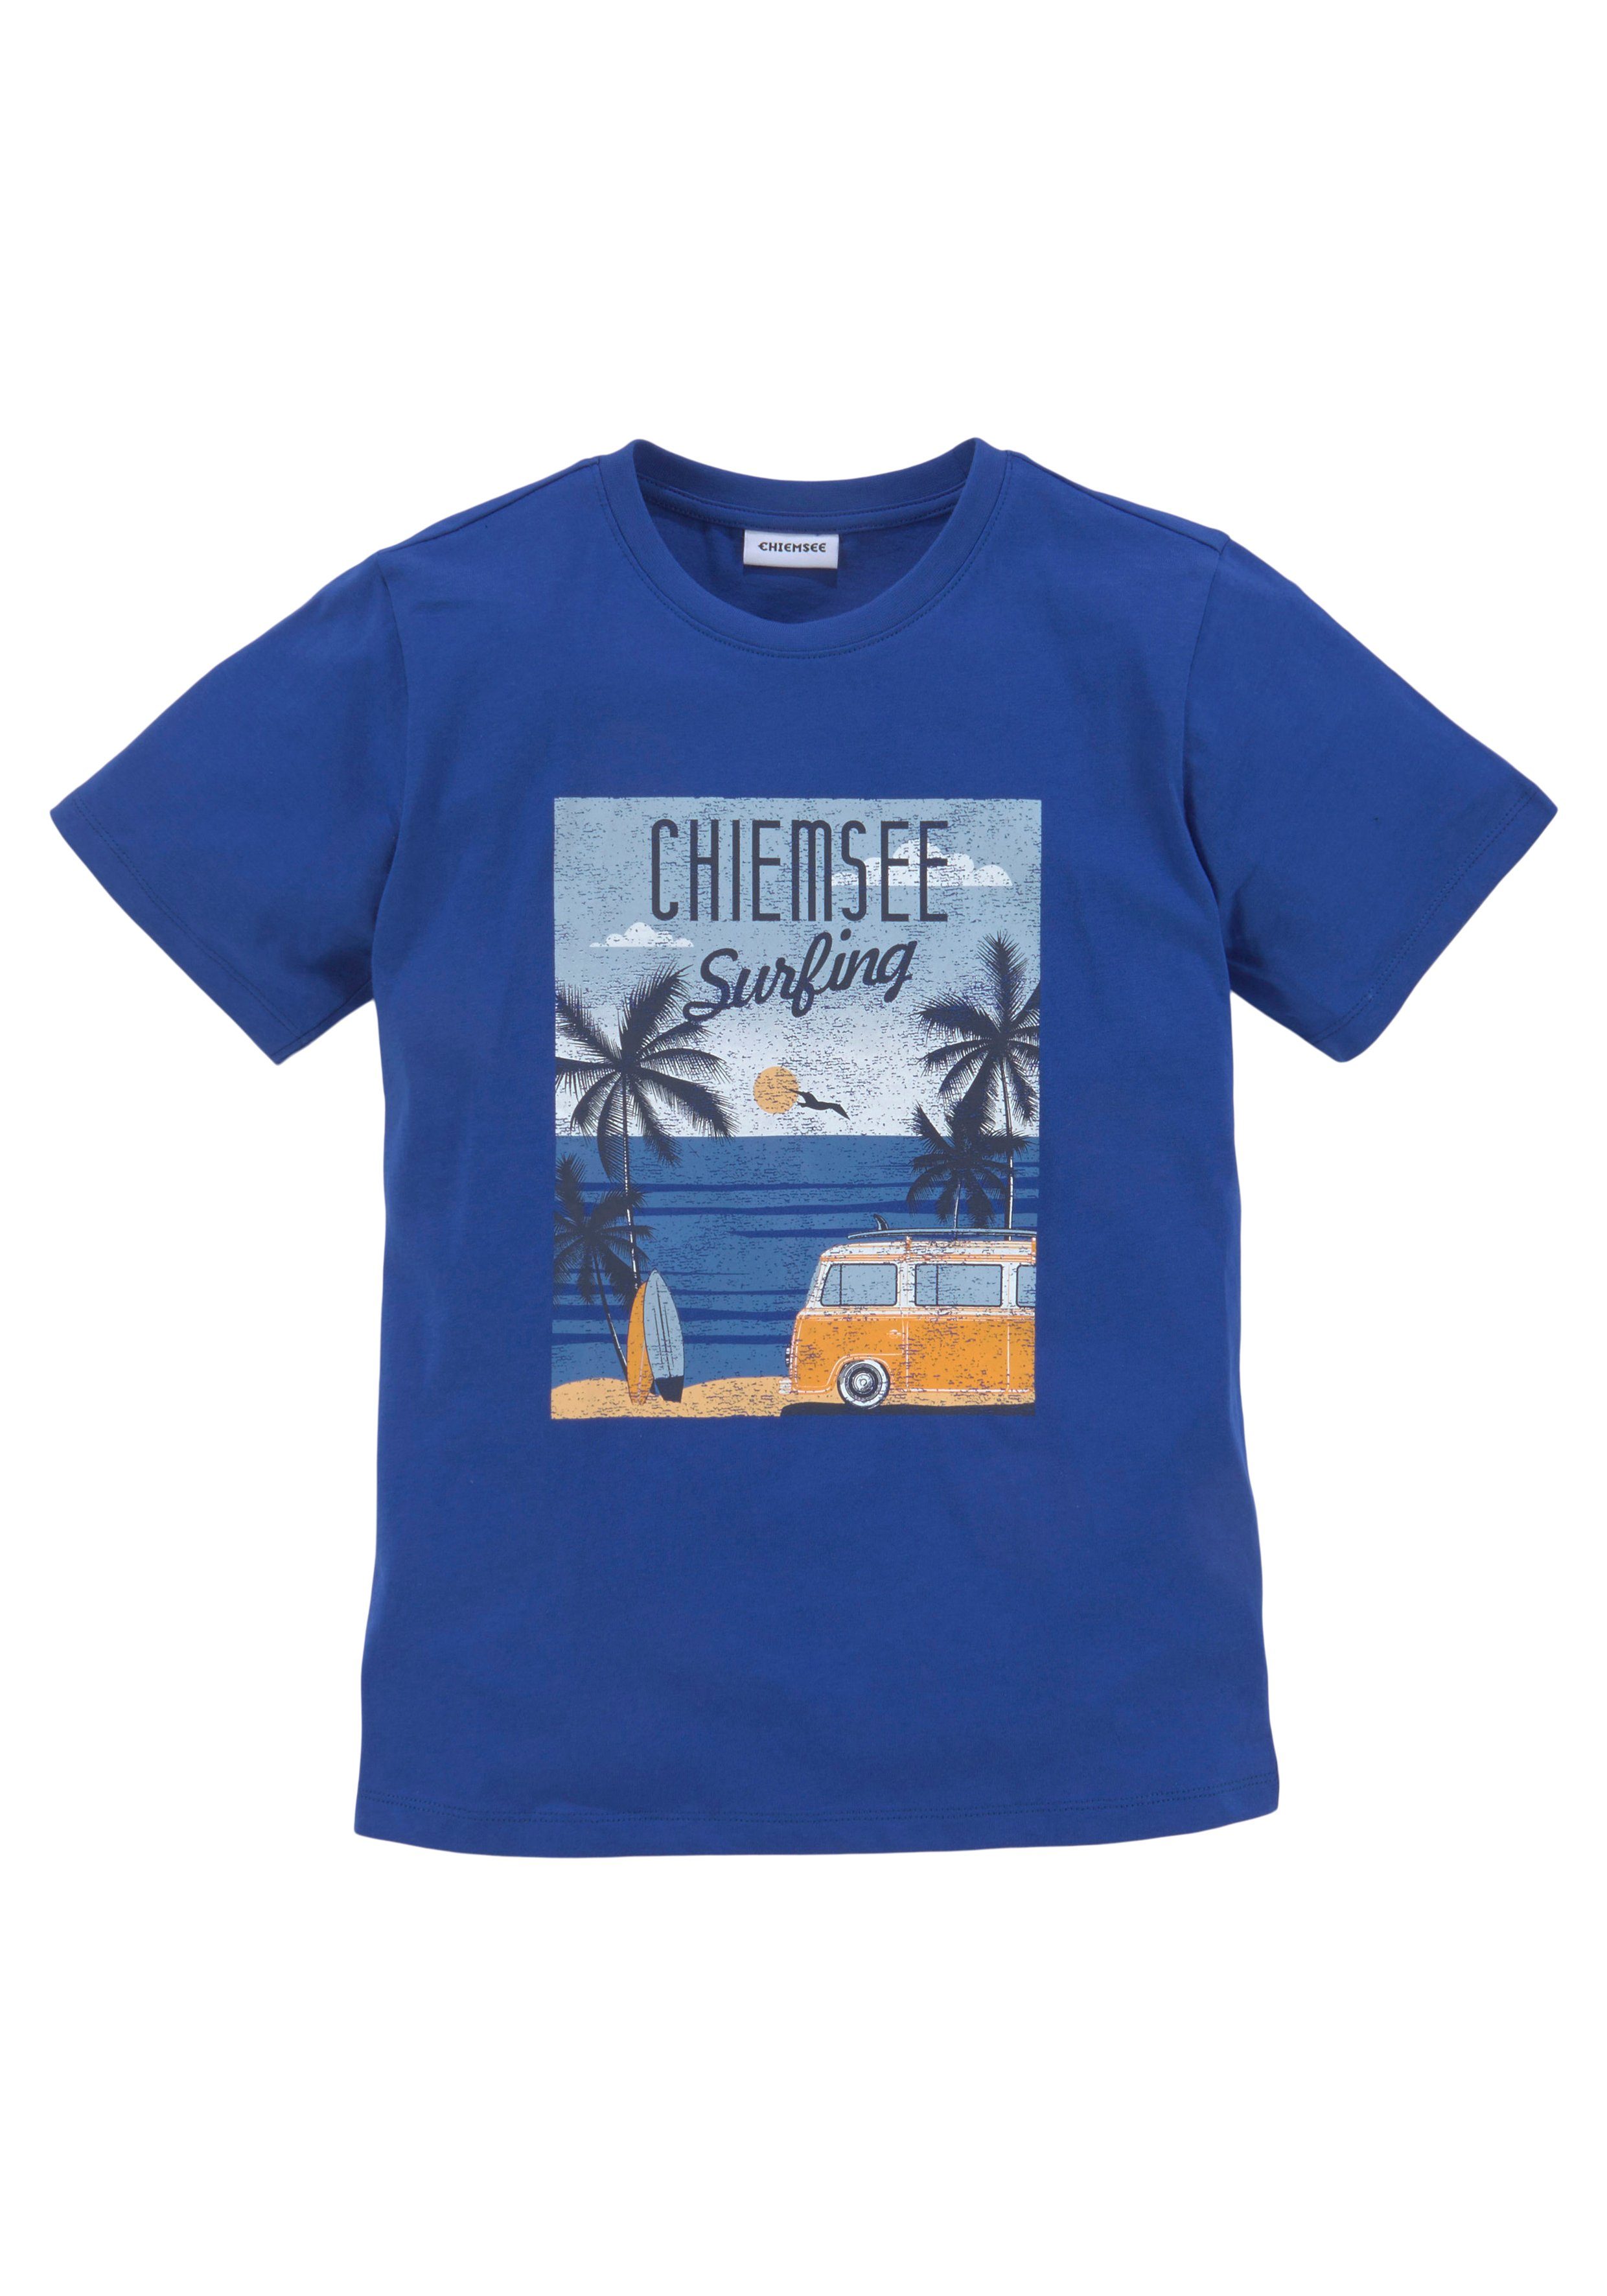 Chiemsee T-Shirt Surfing